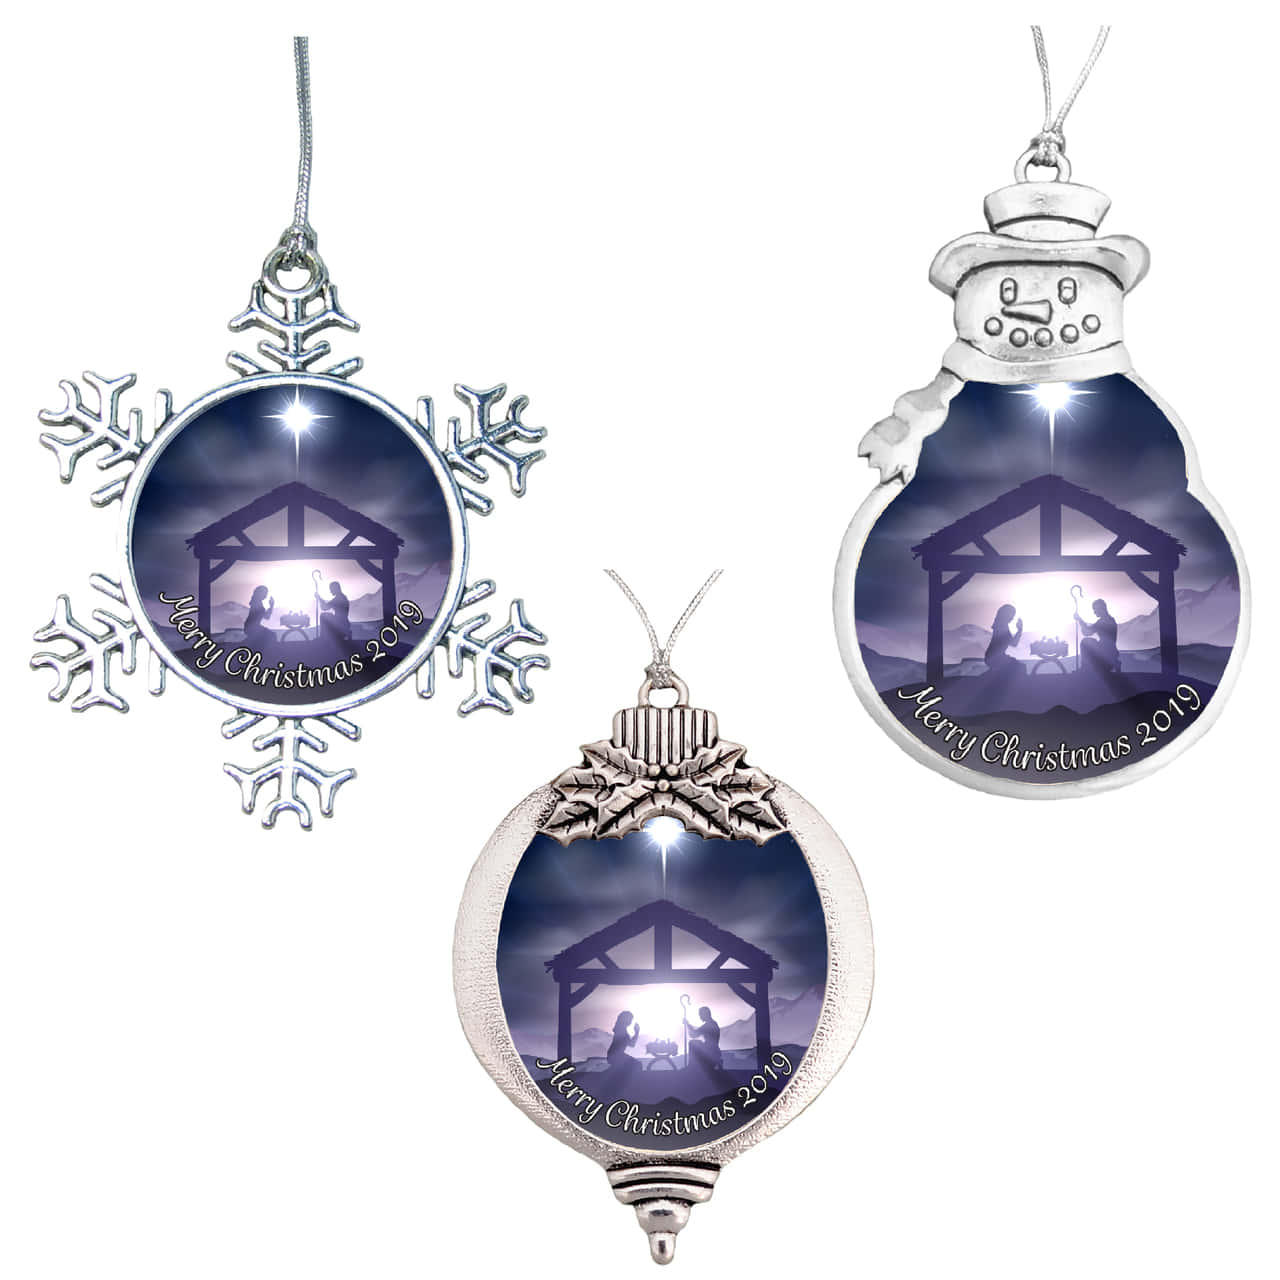 Three Christmas Ornaments With A Nativity Scene